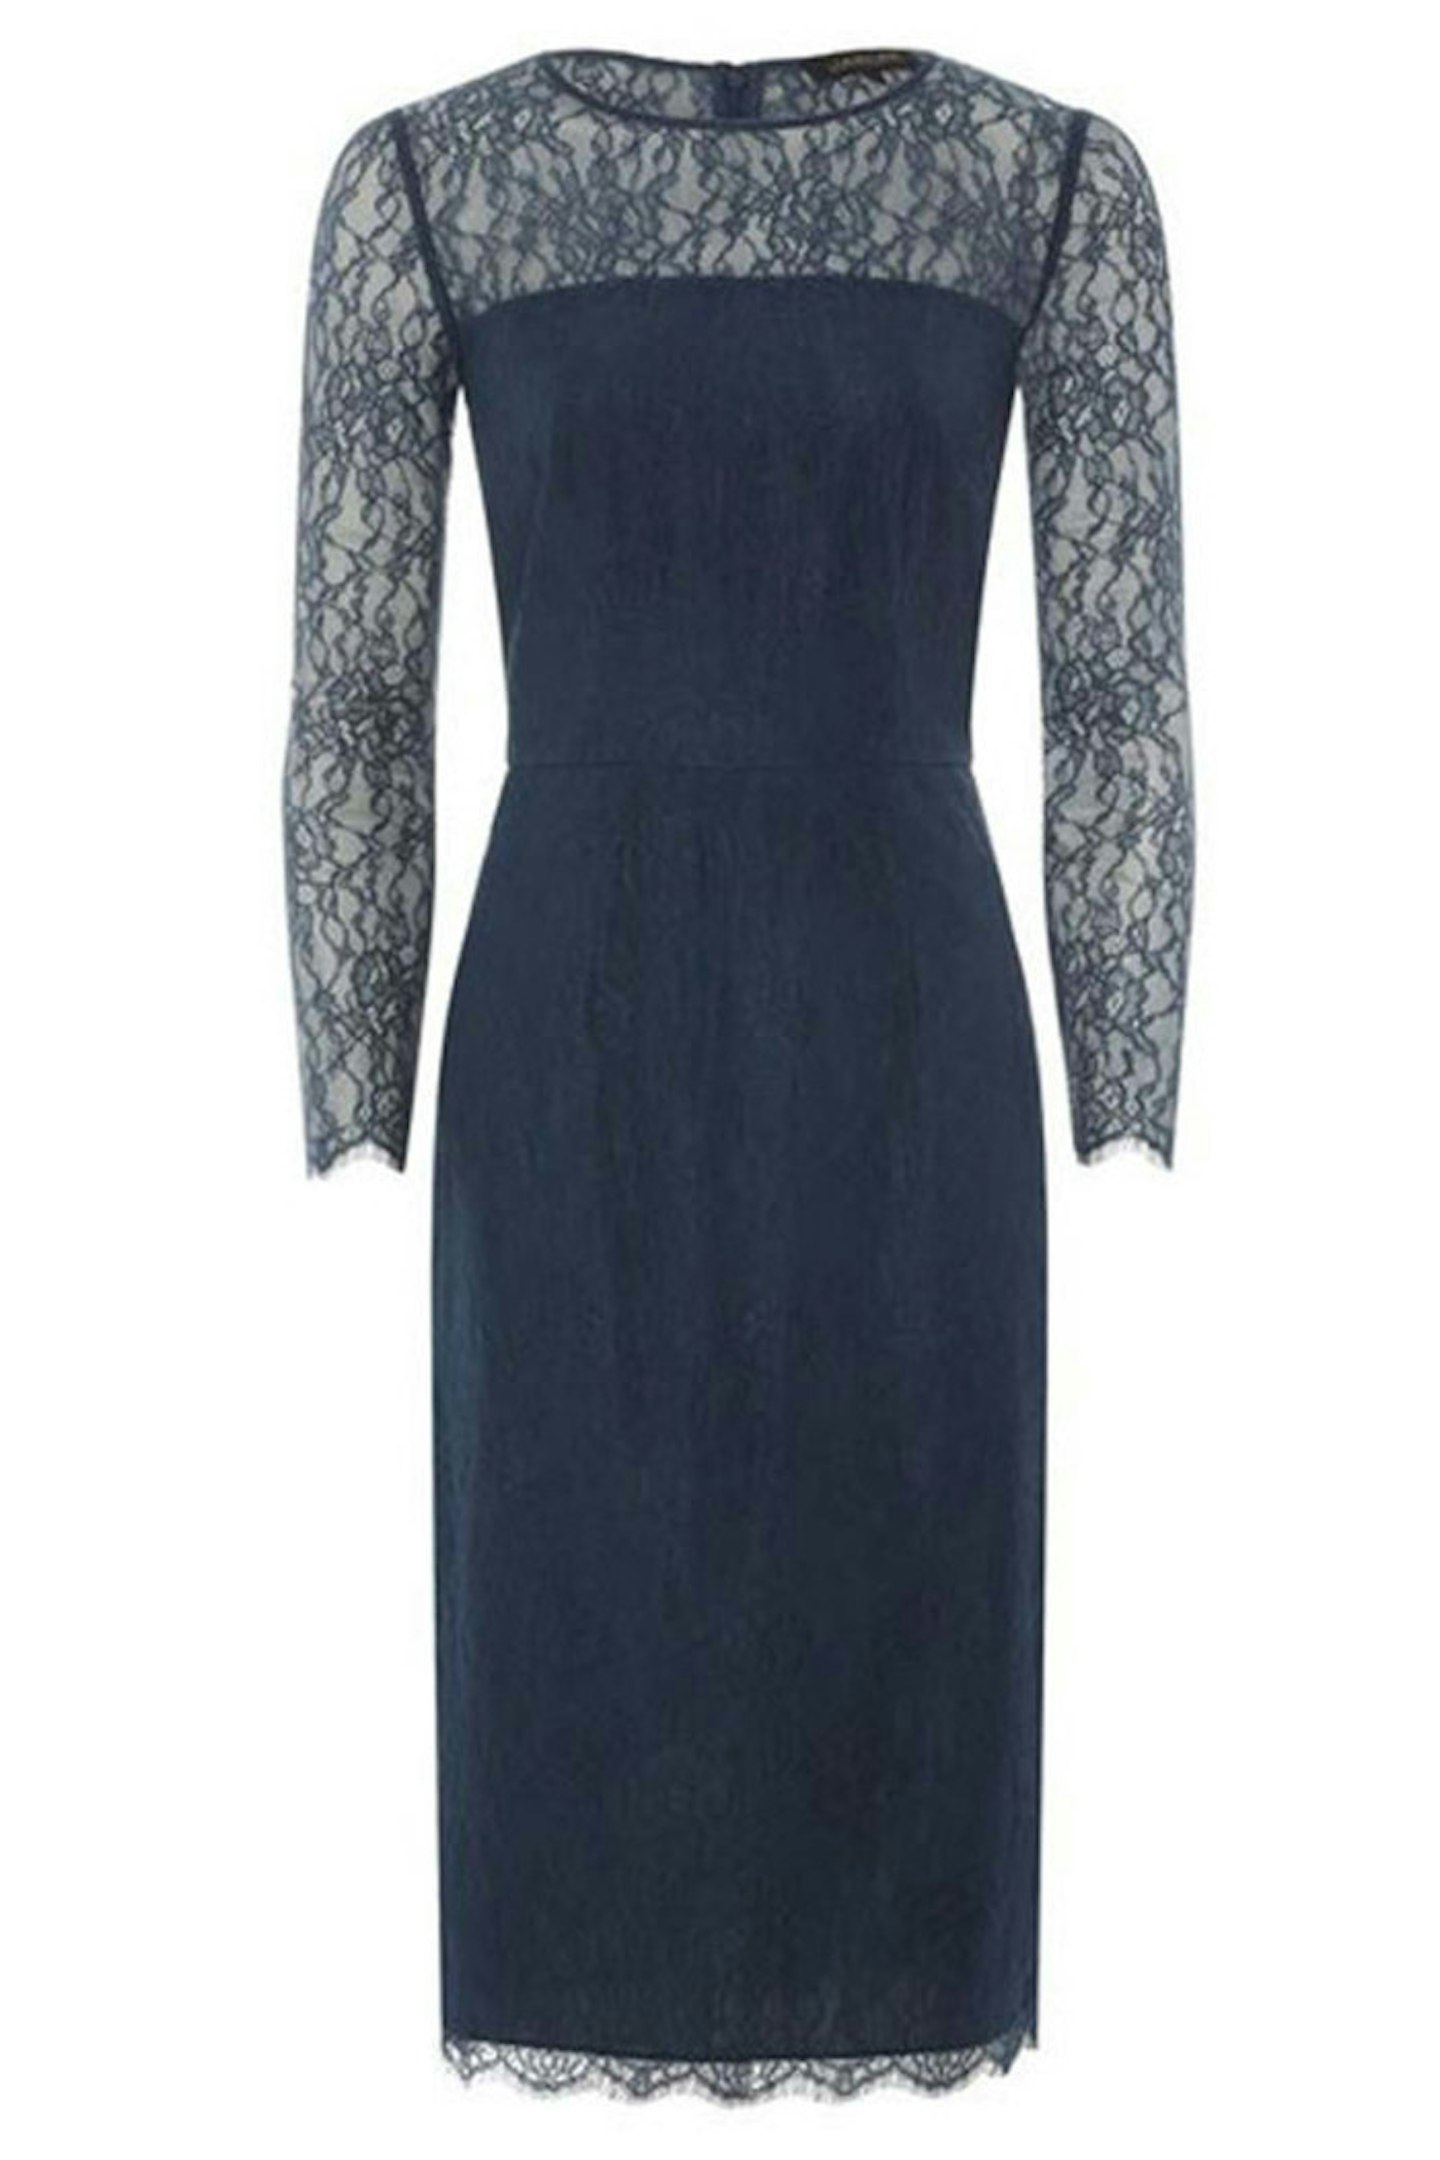 Navy Lace Dress, £220, Jaeger